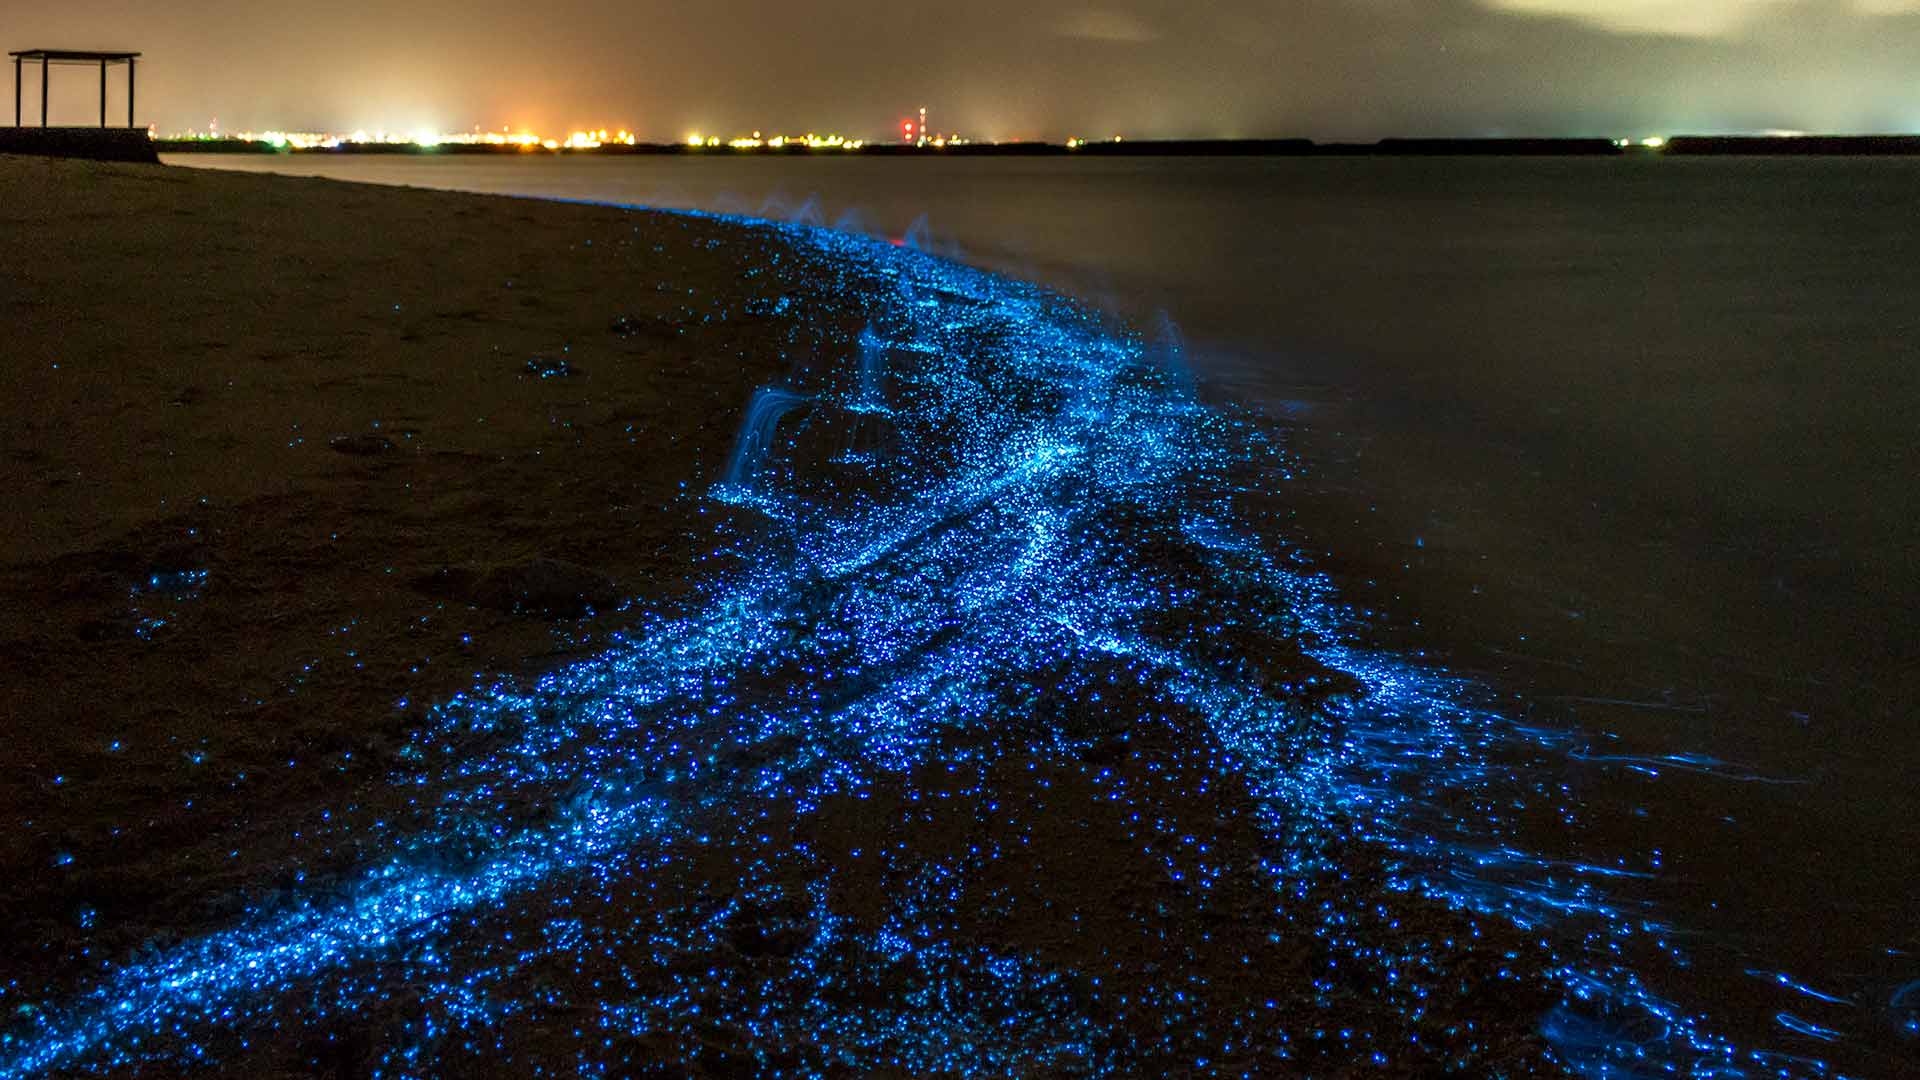 bio-luminescence-illumination-of-plankton-at-maldives